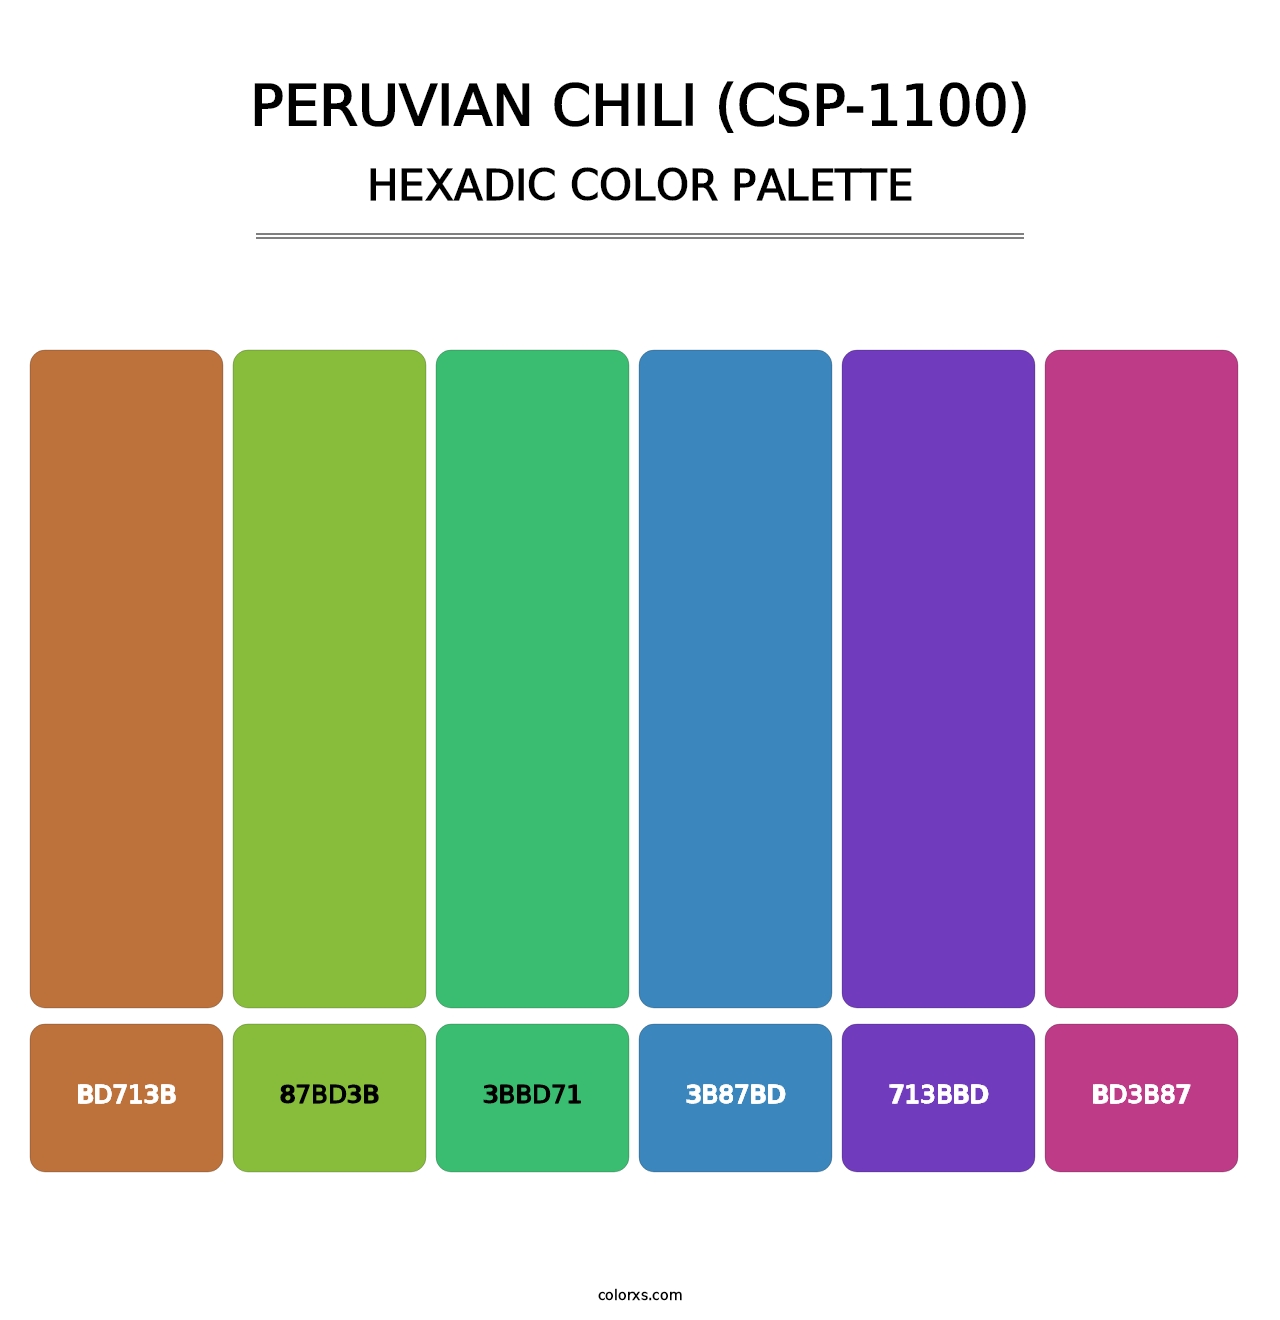 Peruvian Chili (CSP-1100) - Hexadic Color Palette